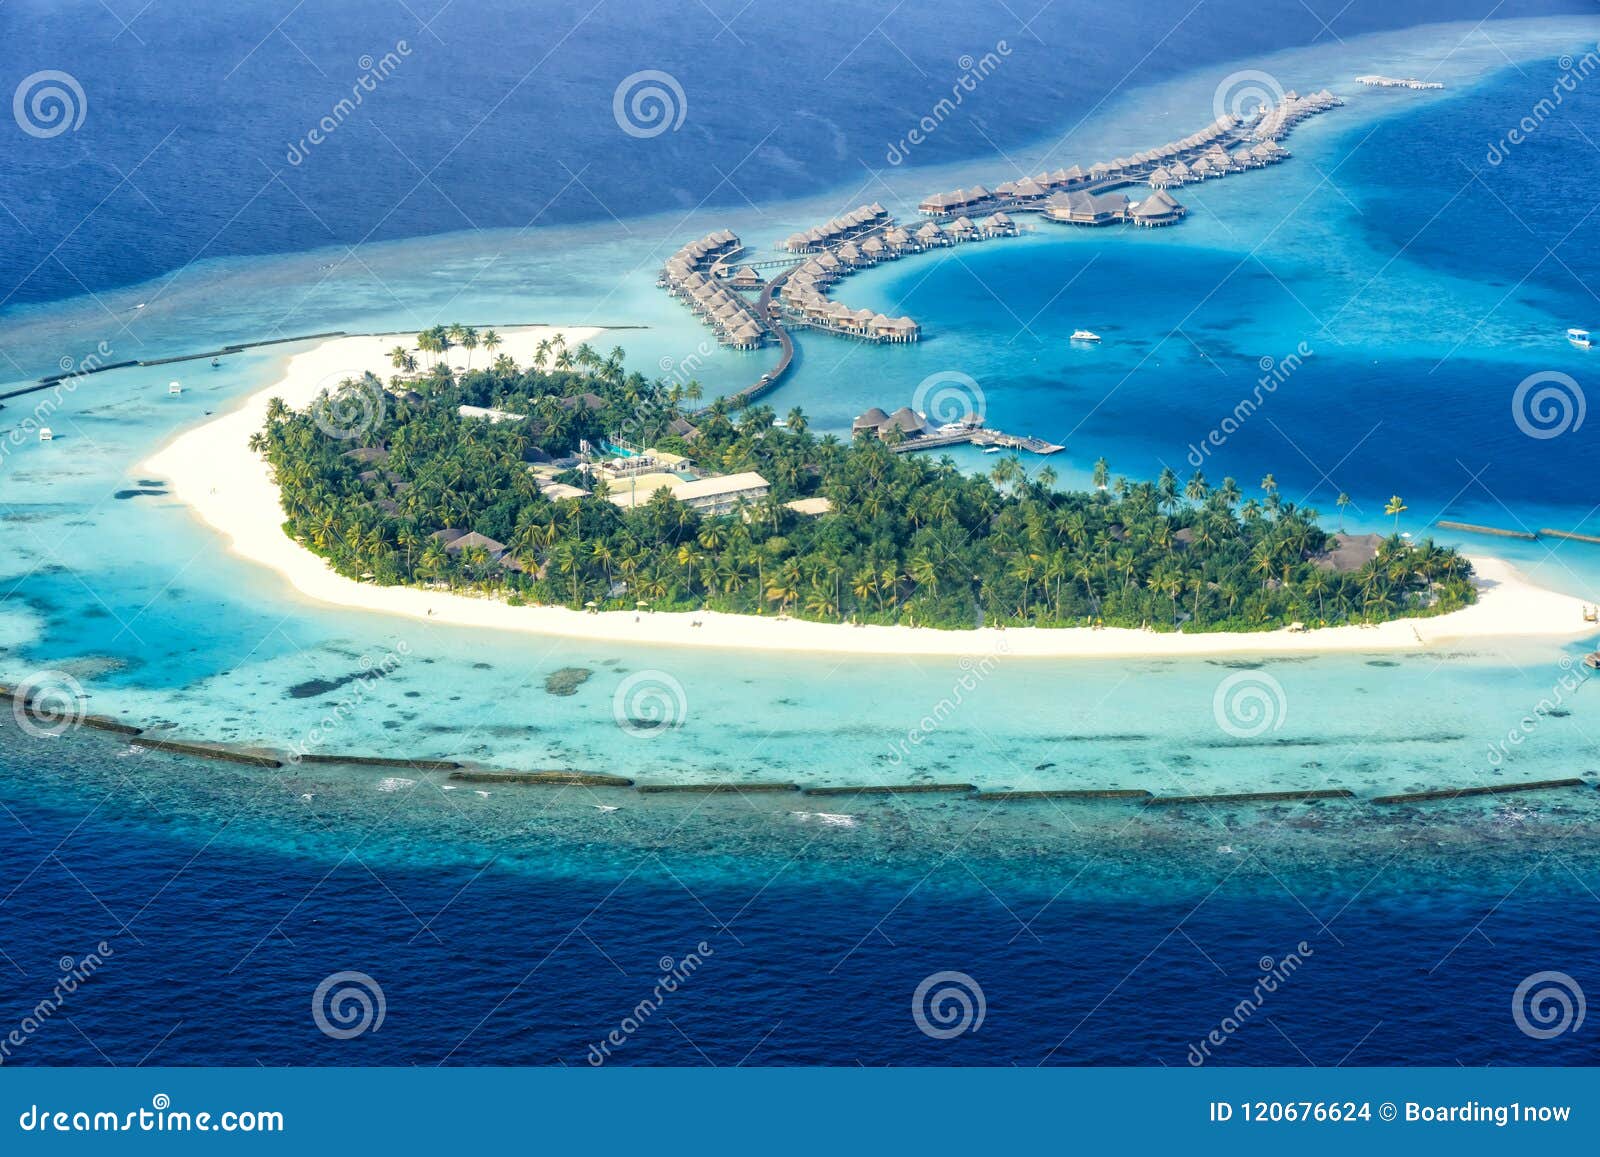 maldives island vacation paradise sea halaveli resort ari atoll